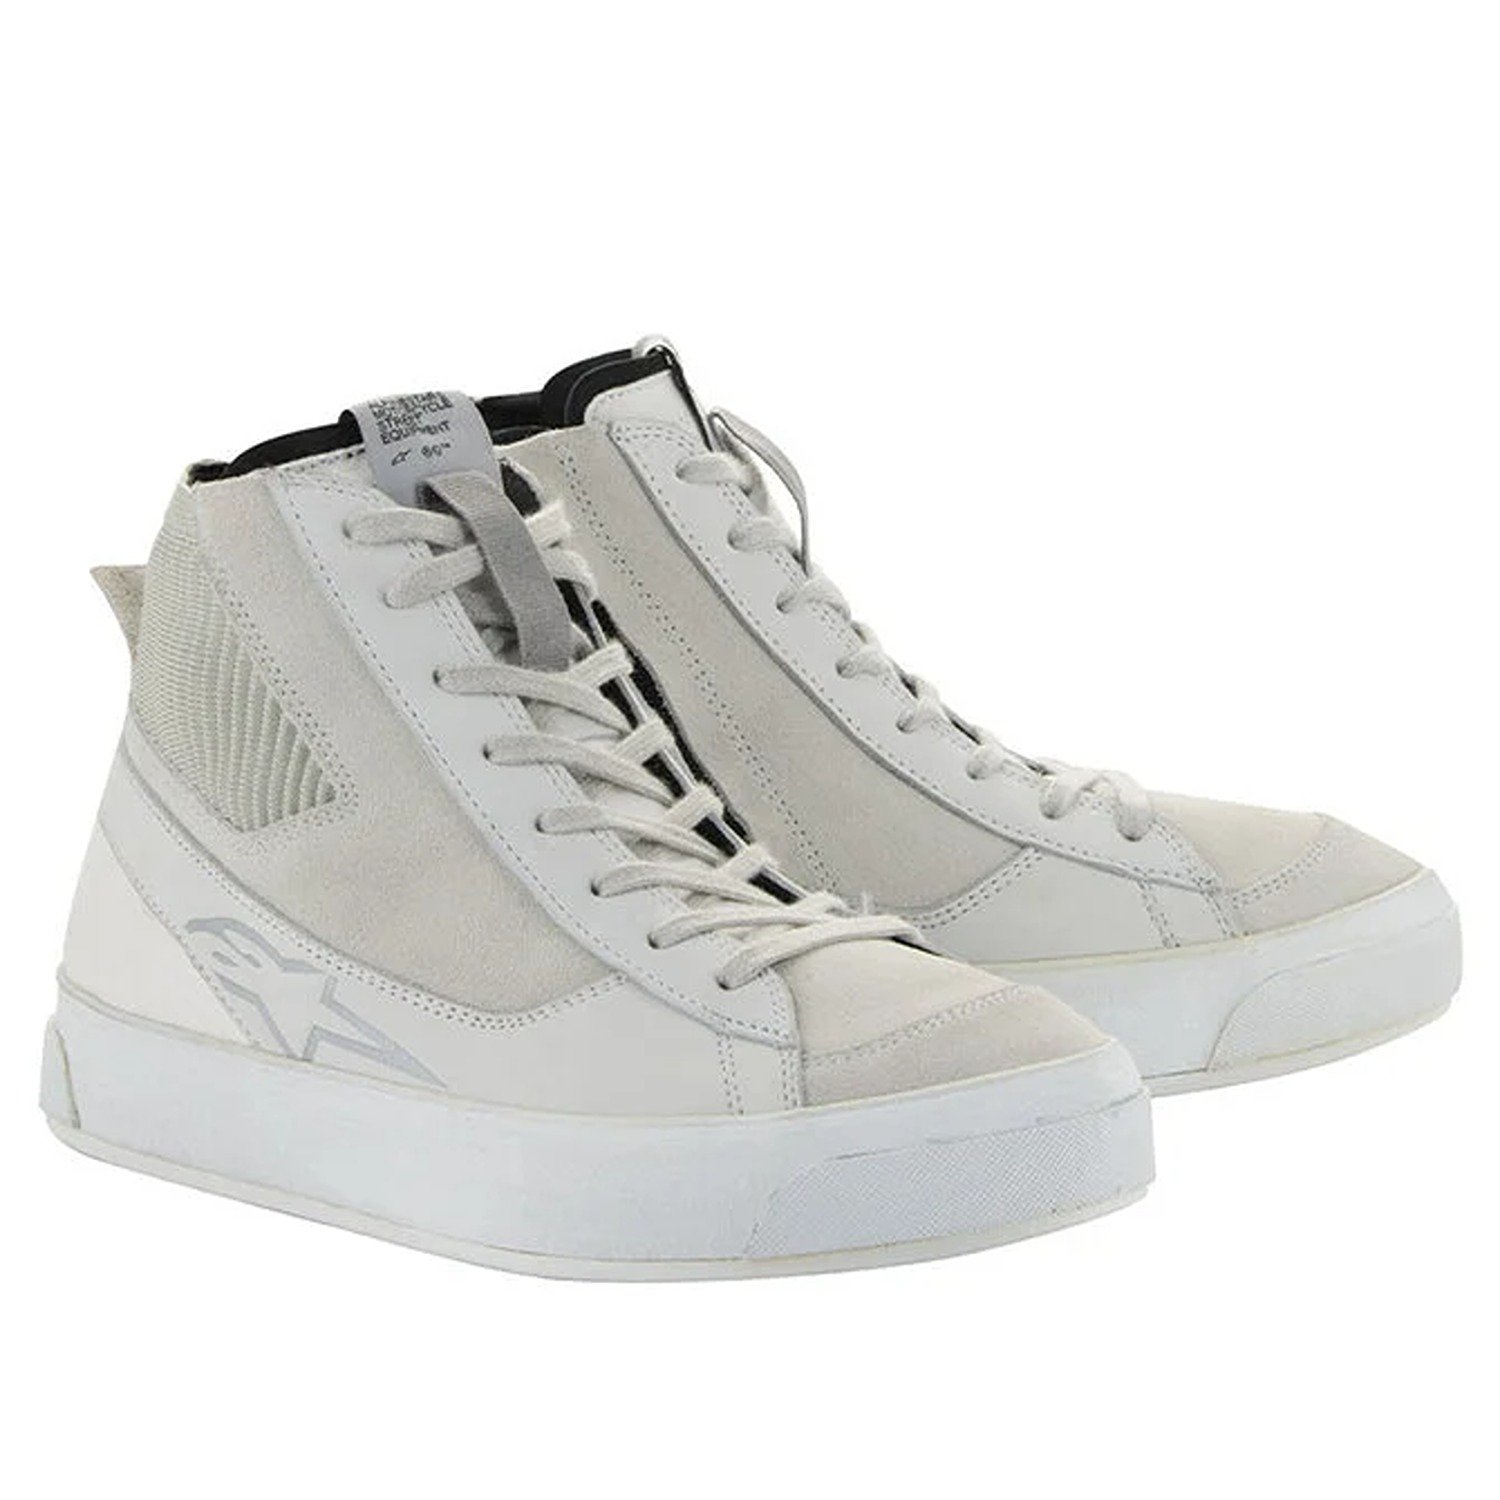 Image of EU Alpinestars Stella Stated Podium Shoes White Cool Gray Taille US 115